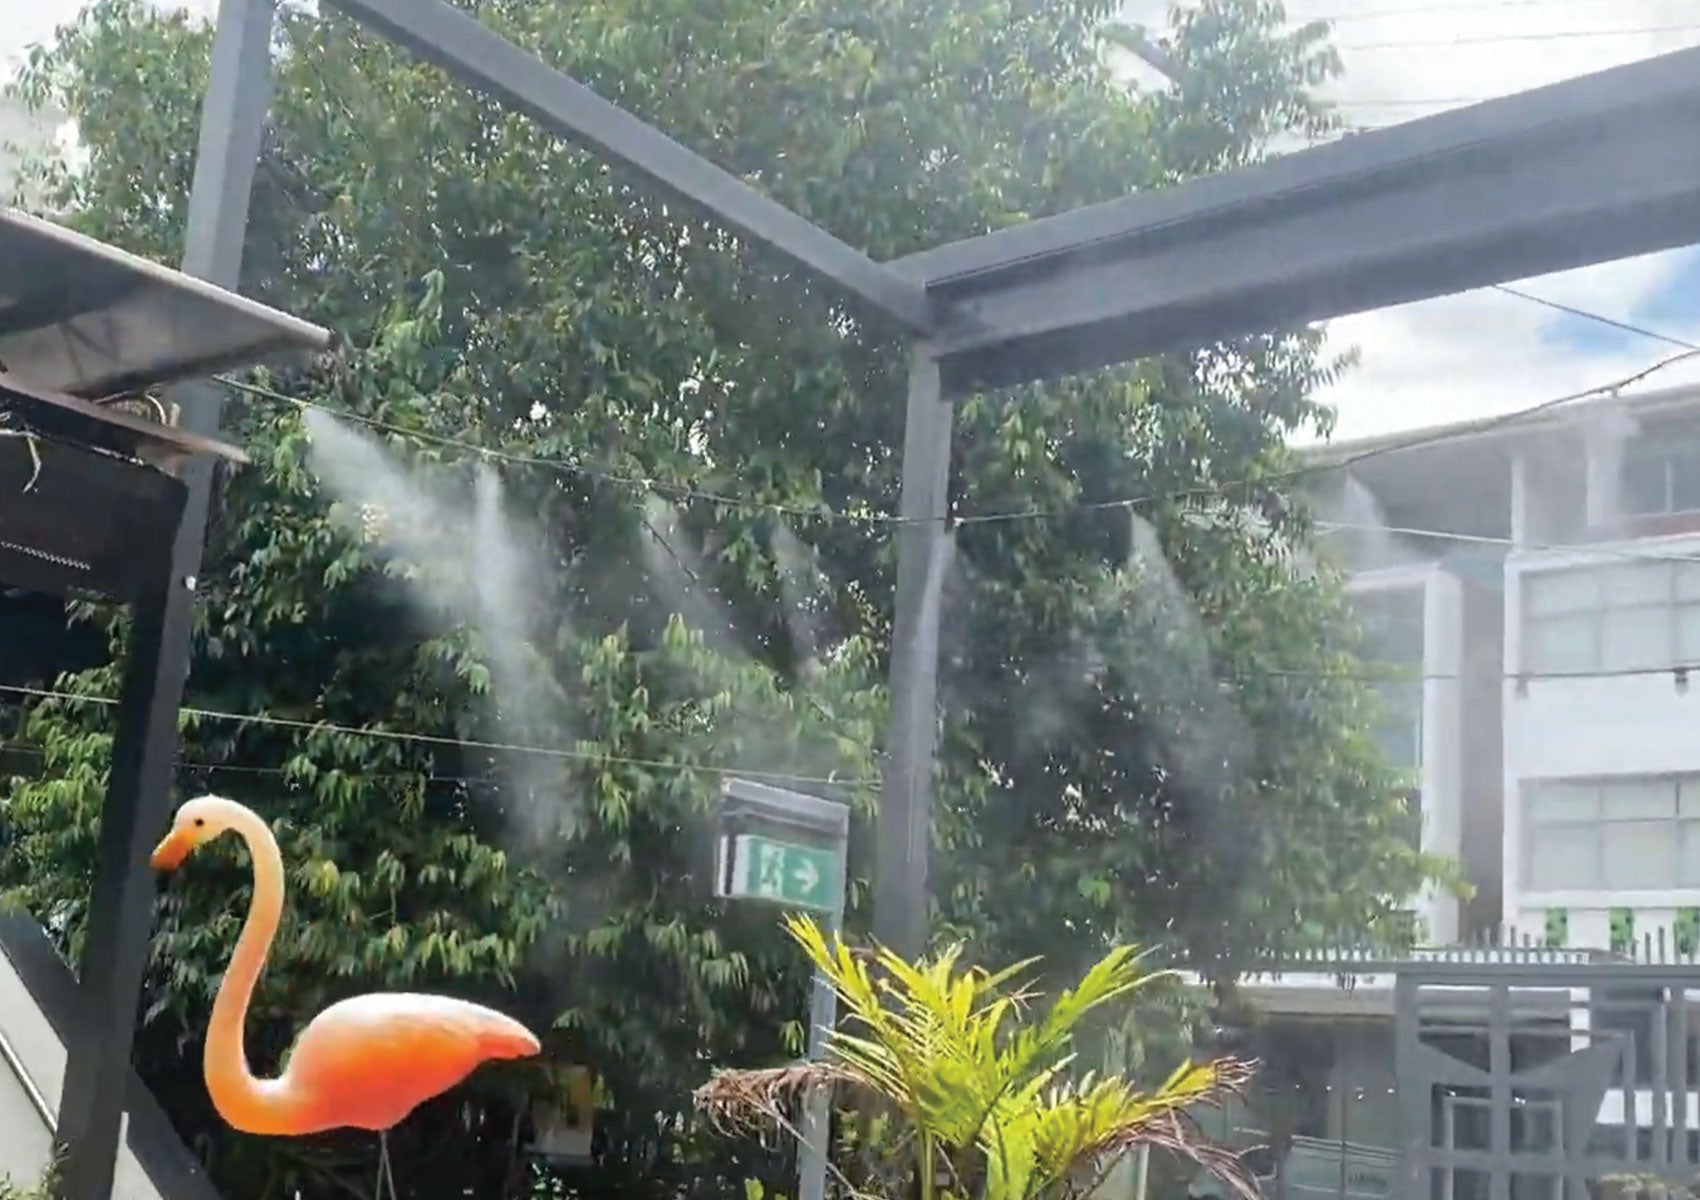 high-pressure misting system in backyard